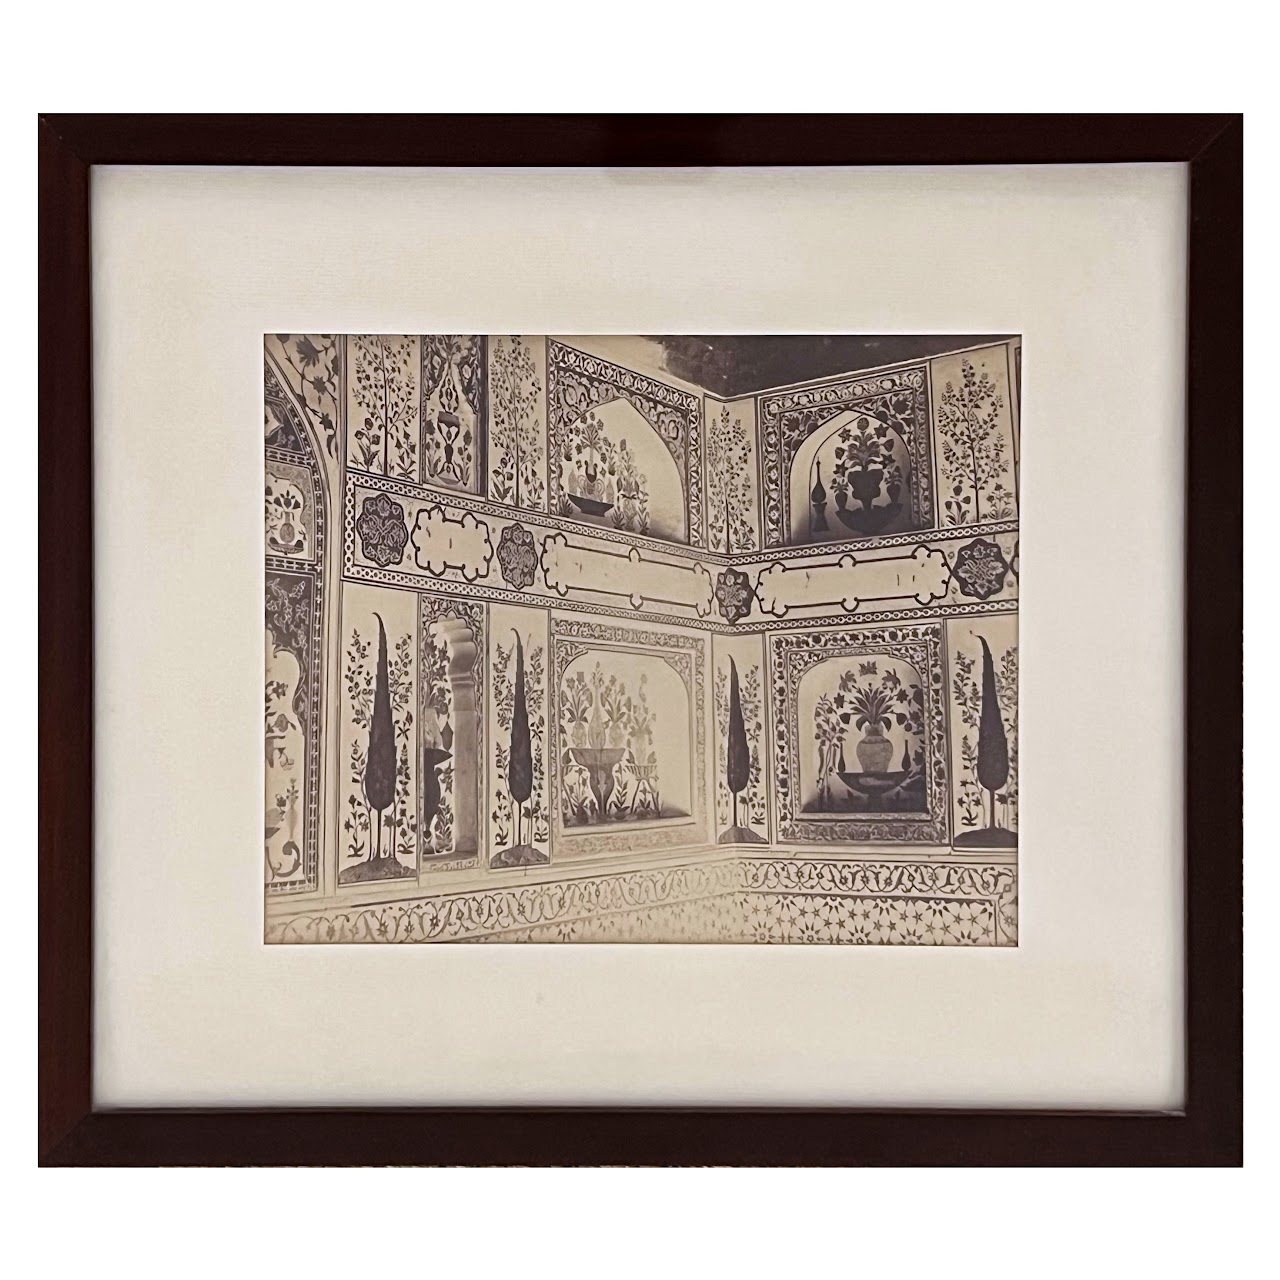 Red Fort Delhi, India Architectural Interior Photograph Bookplate Pair